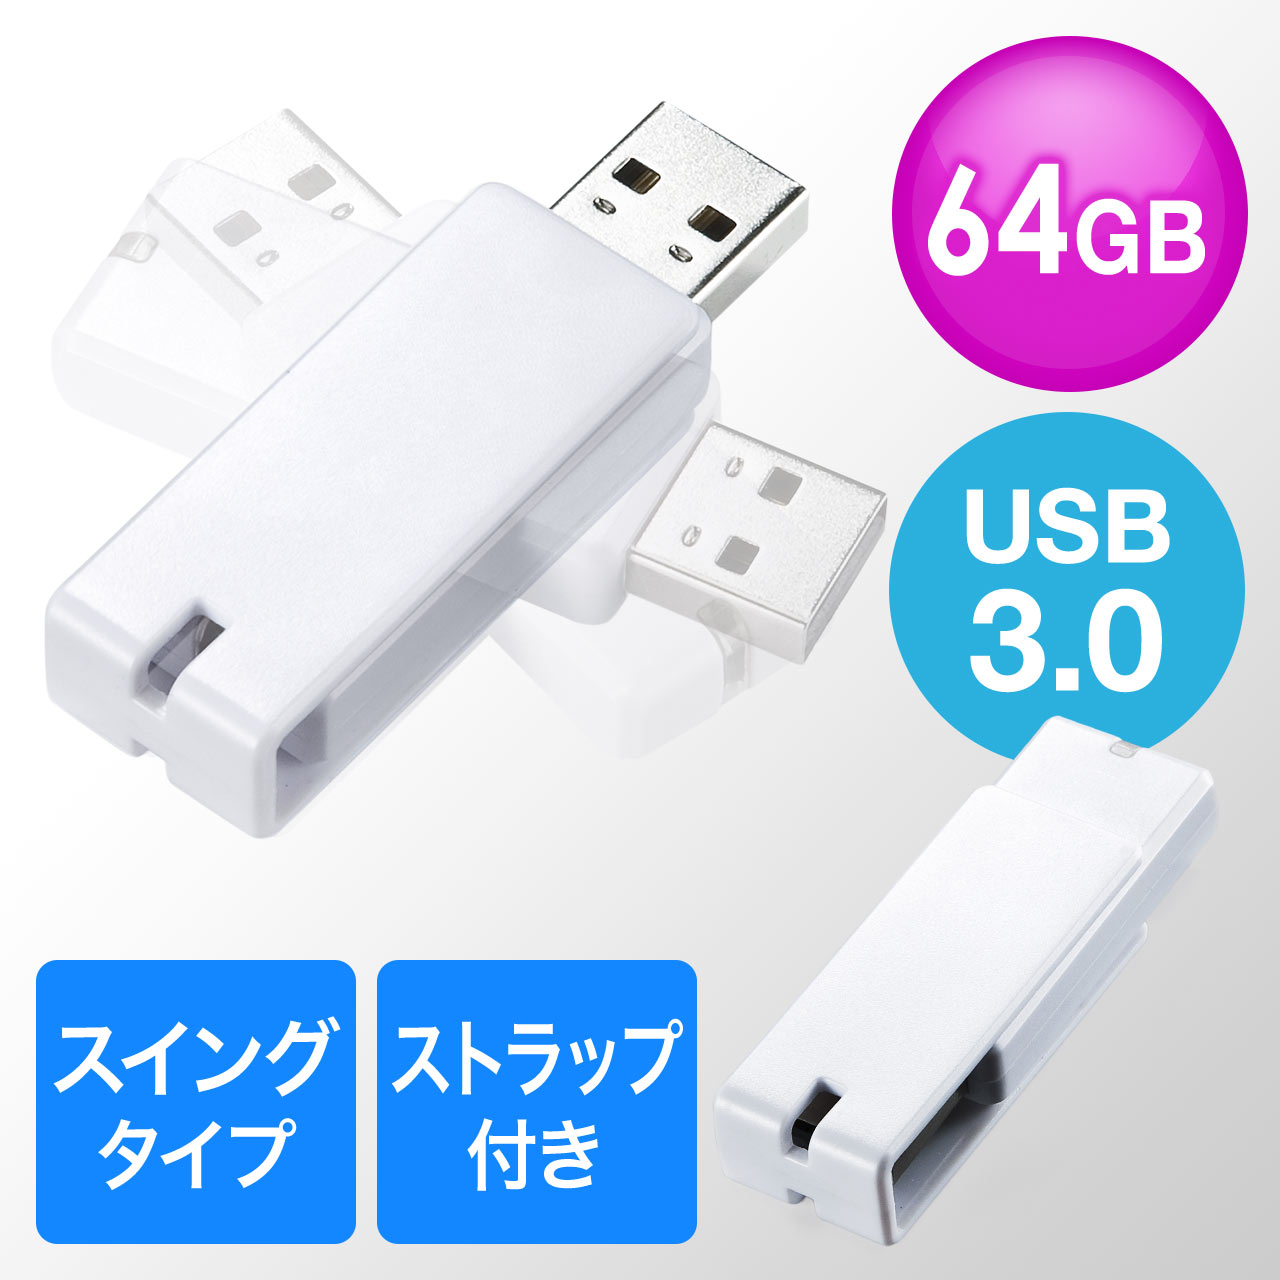 USBiUSB3.0EXCOELbvXEXgbvtEΉE64GBEzCgj 600-3US64GW